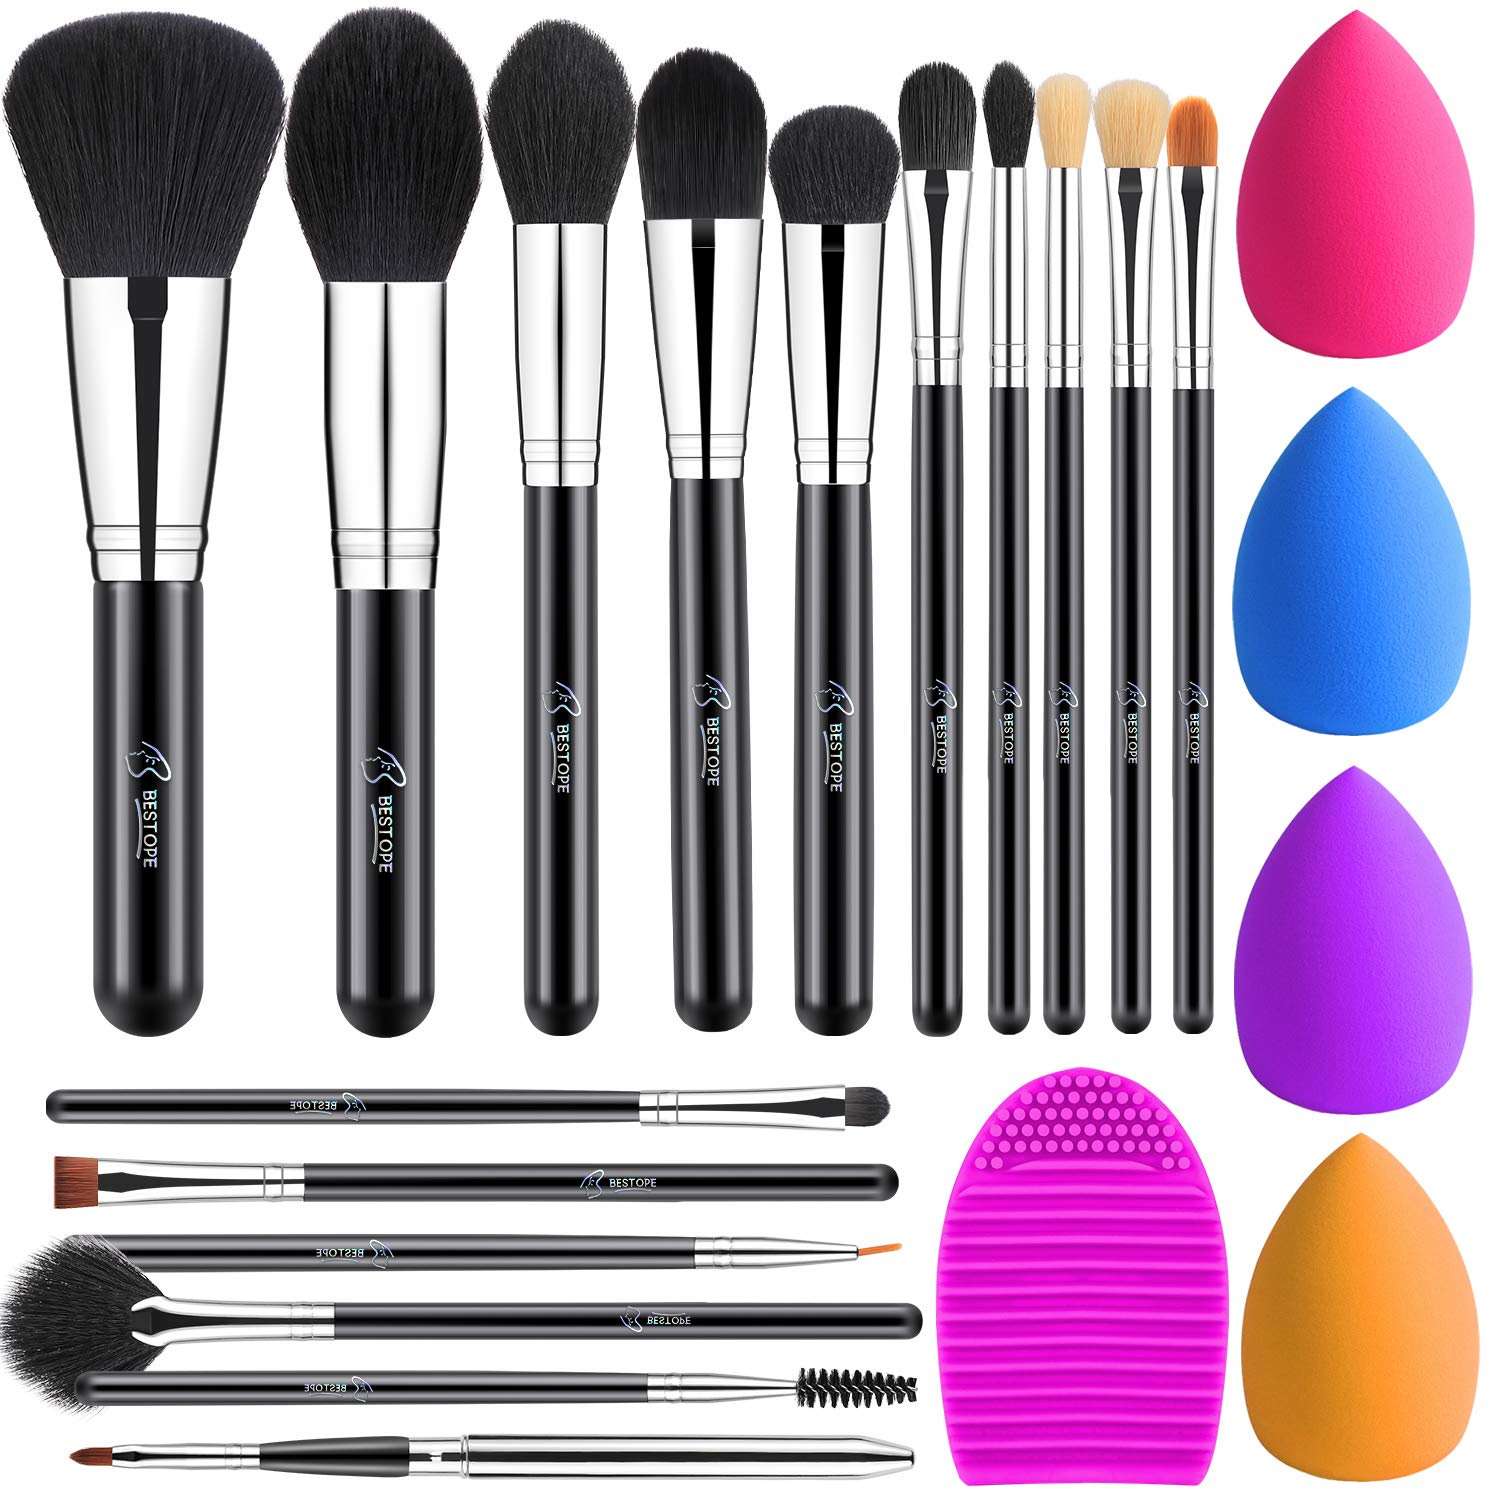 Makeup Brushes 16PCs Makeup Brushes Set $6.49 Free Shipping